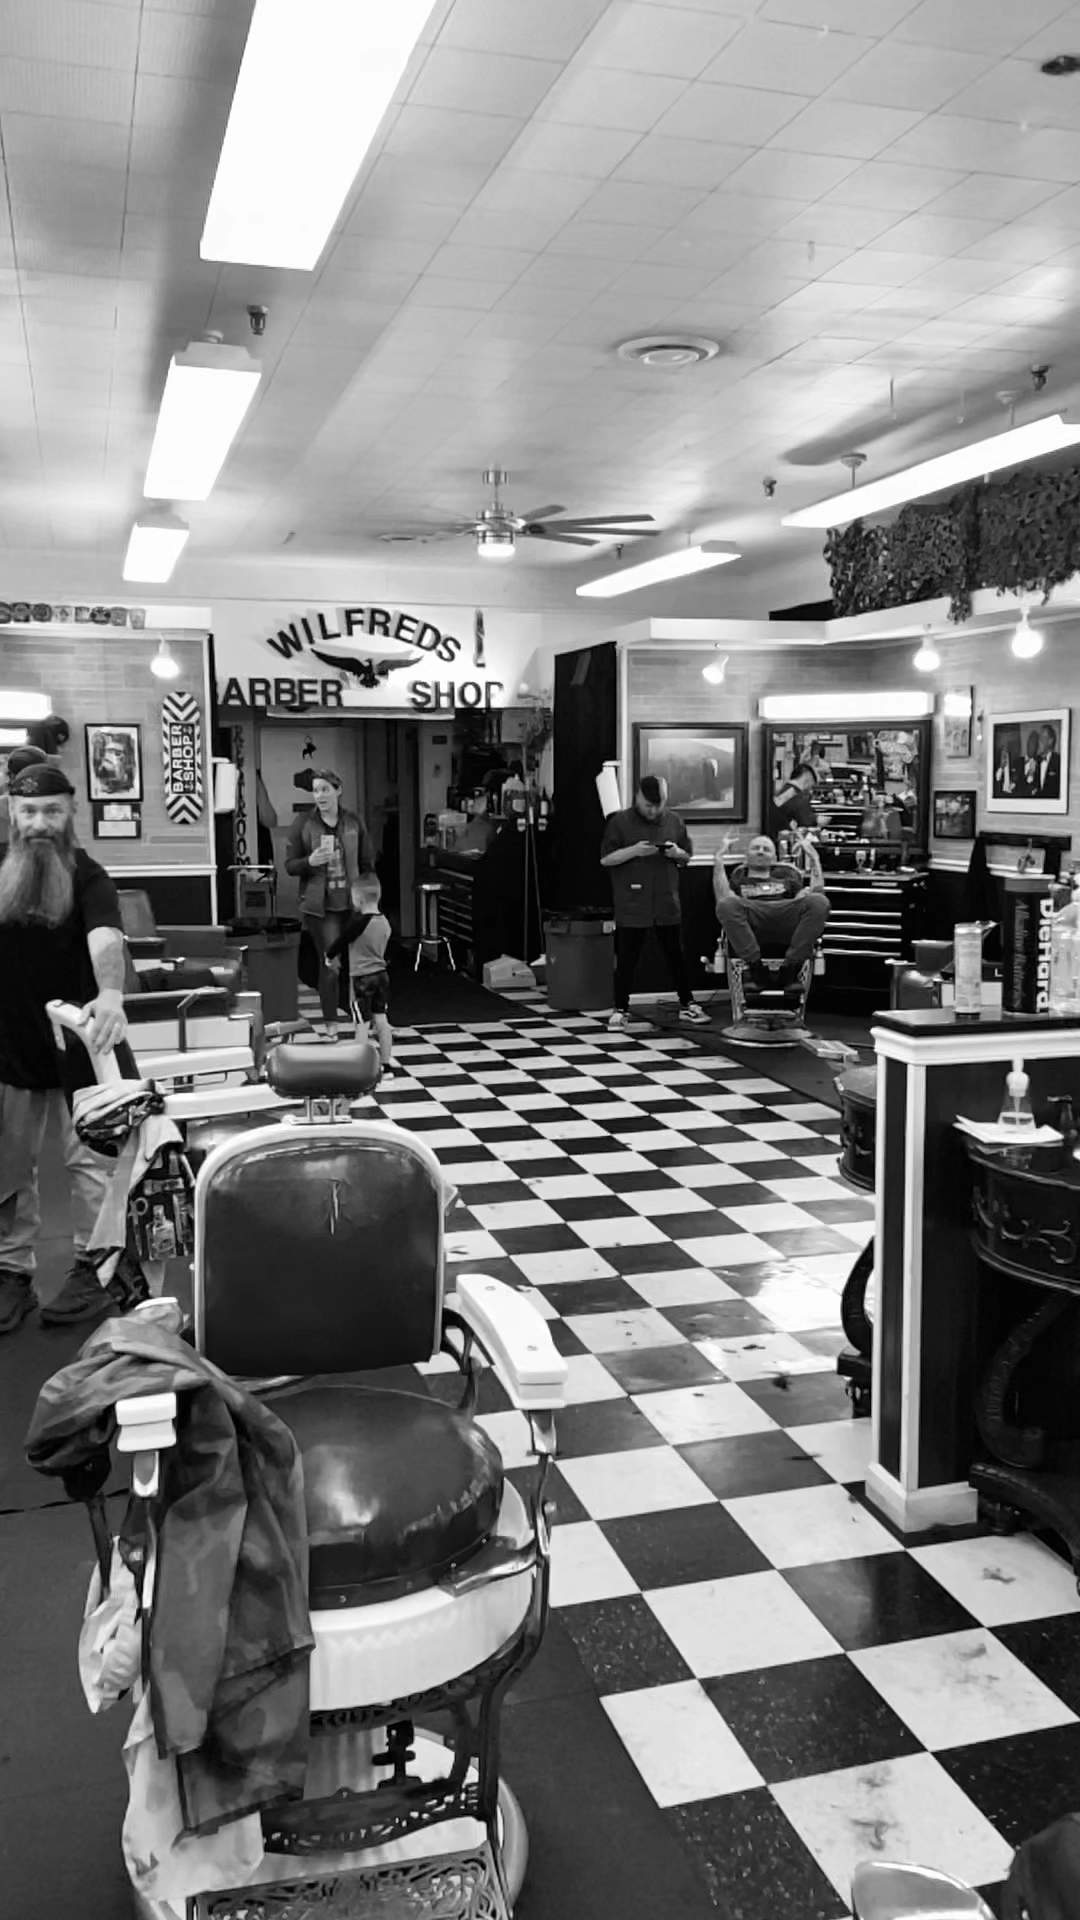 Wilfred's Barber Shop & Salon